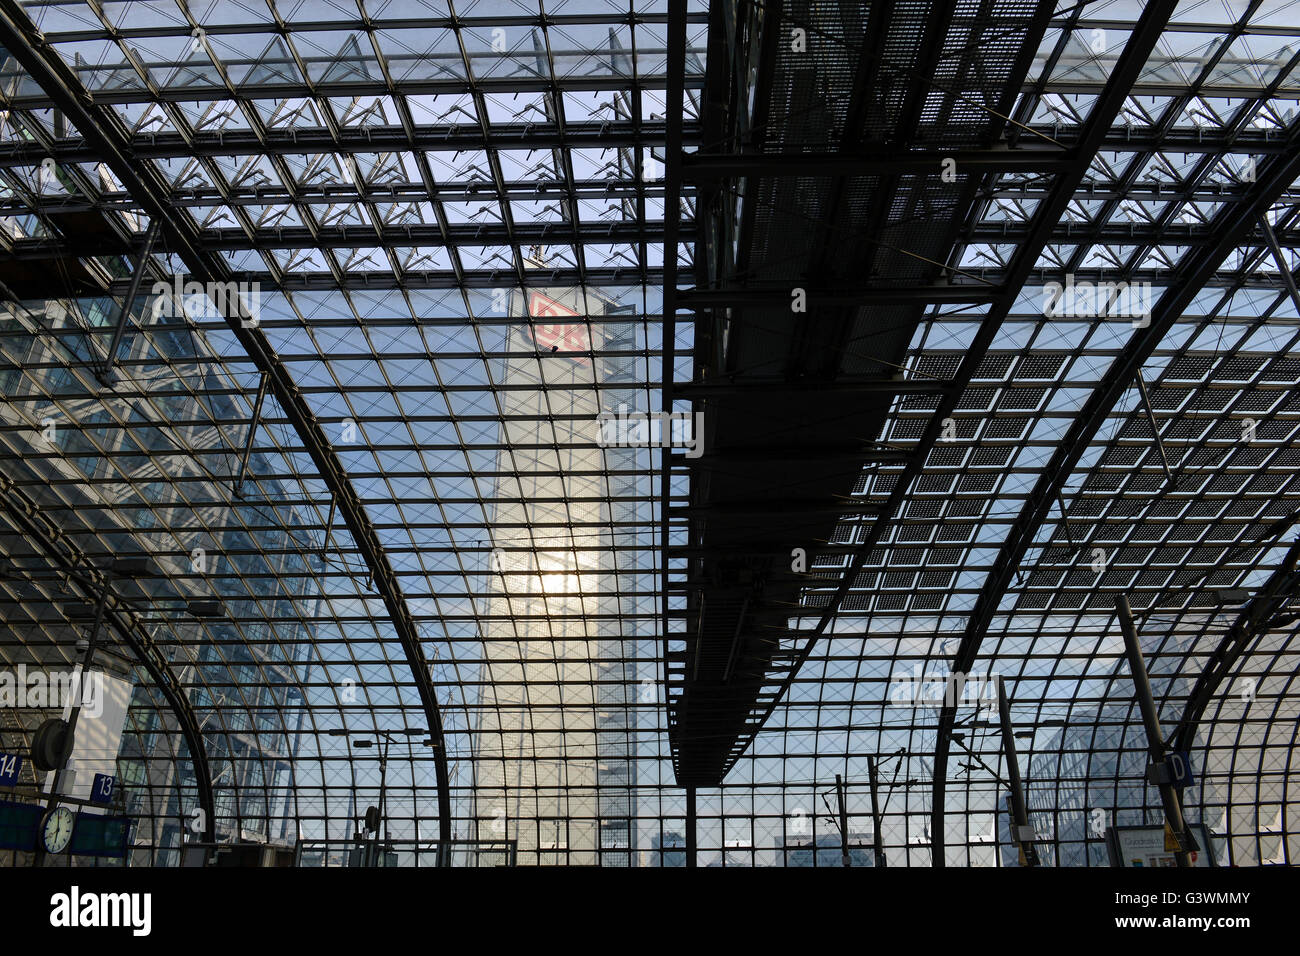 DEUTSCHLAND Berlin, Hauptbahnhof mit Solarpanel auf Glasdach / DEUTSCHLAND Berlin, Deutsche Bahn AG, Hauptbahnhof mit PV Modulen auf dem Glasdach der Halle Stockfoto